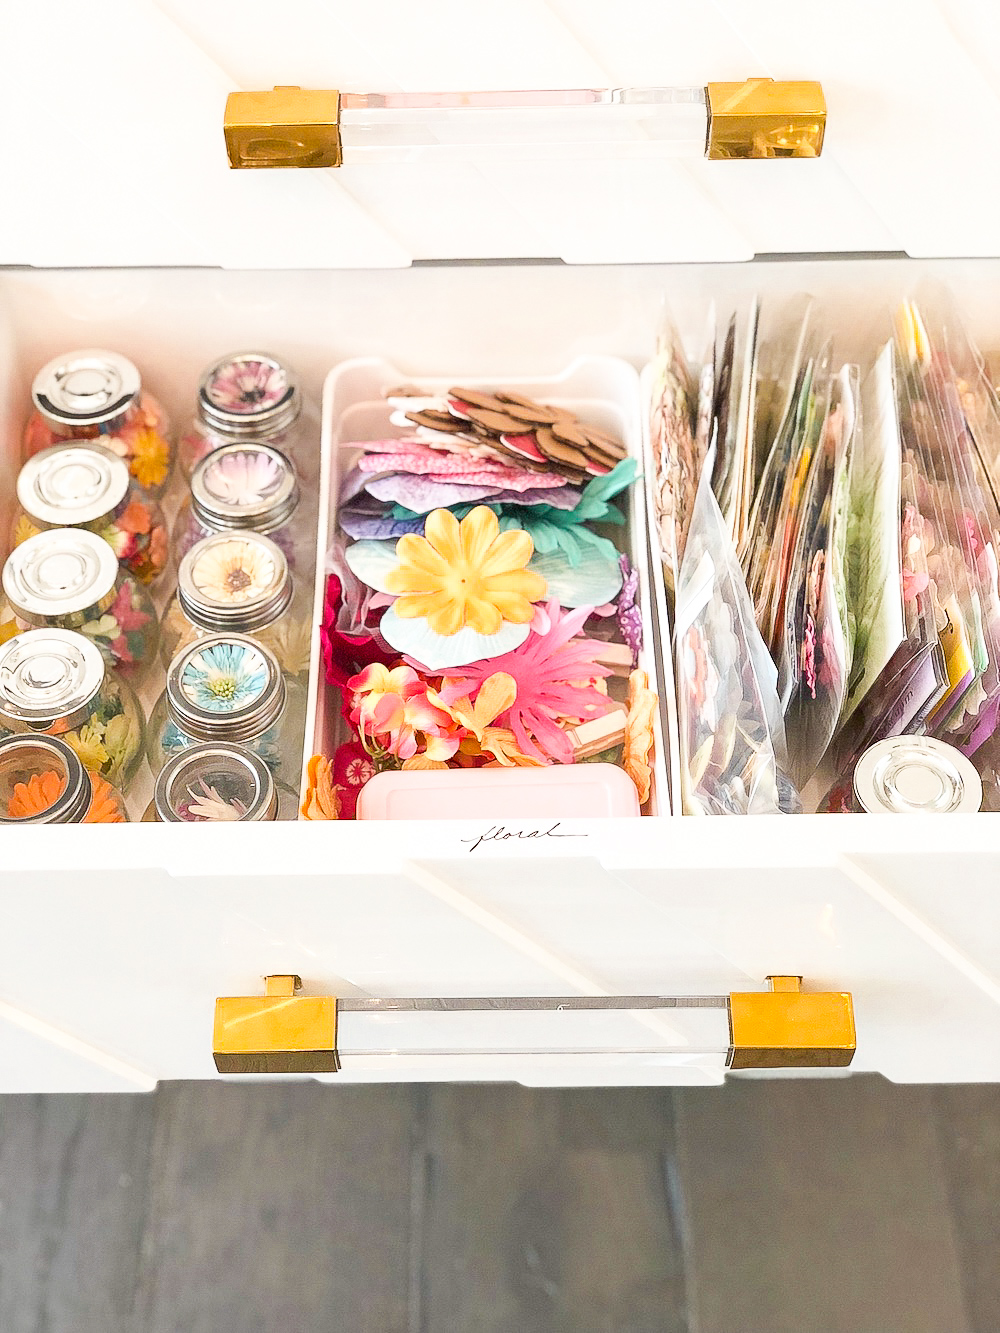 Craft Room Ideas: 14 Organizing Tips for Crafters // Art Supply organizer, Craft room storage, Craft room organization, Craft closet, Scrapbooking Organizing